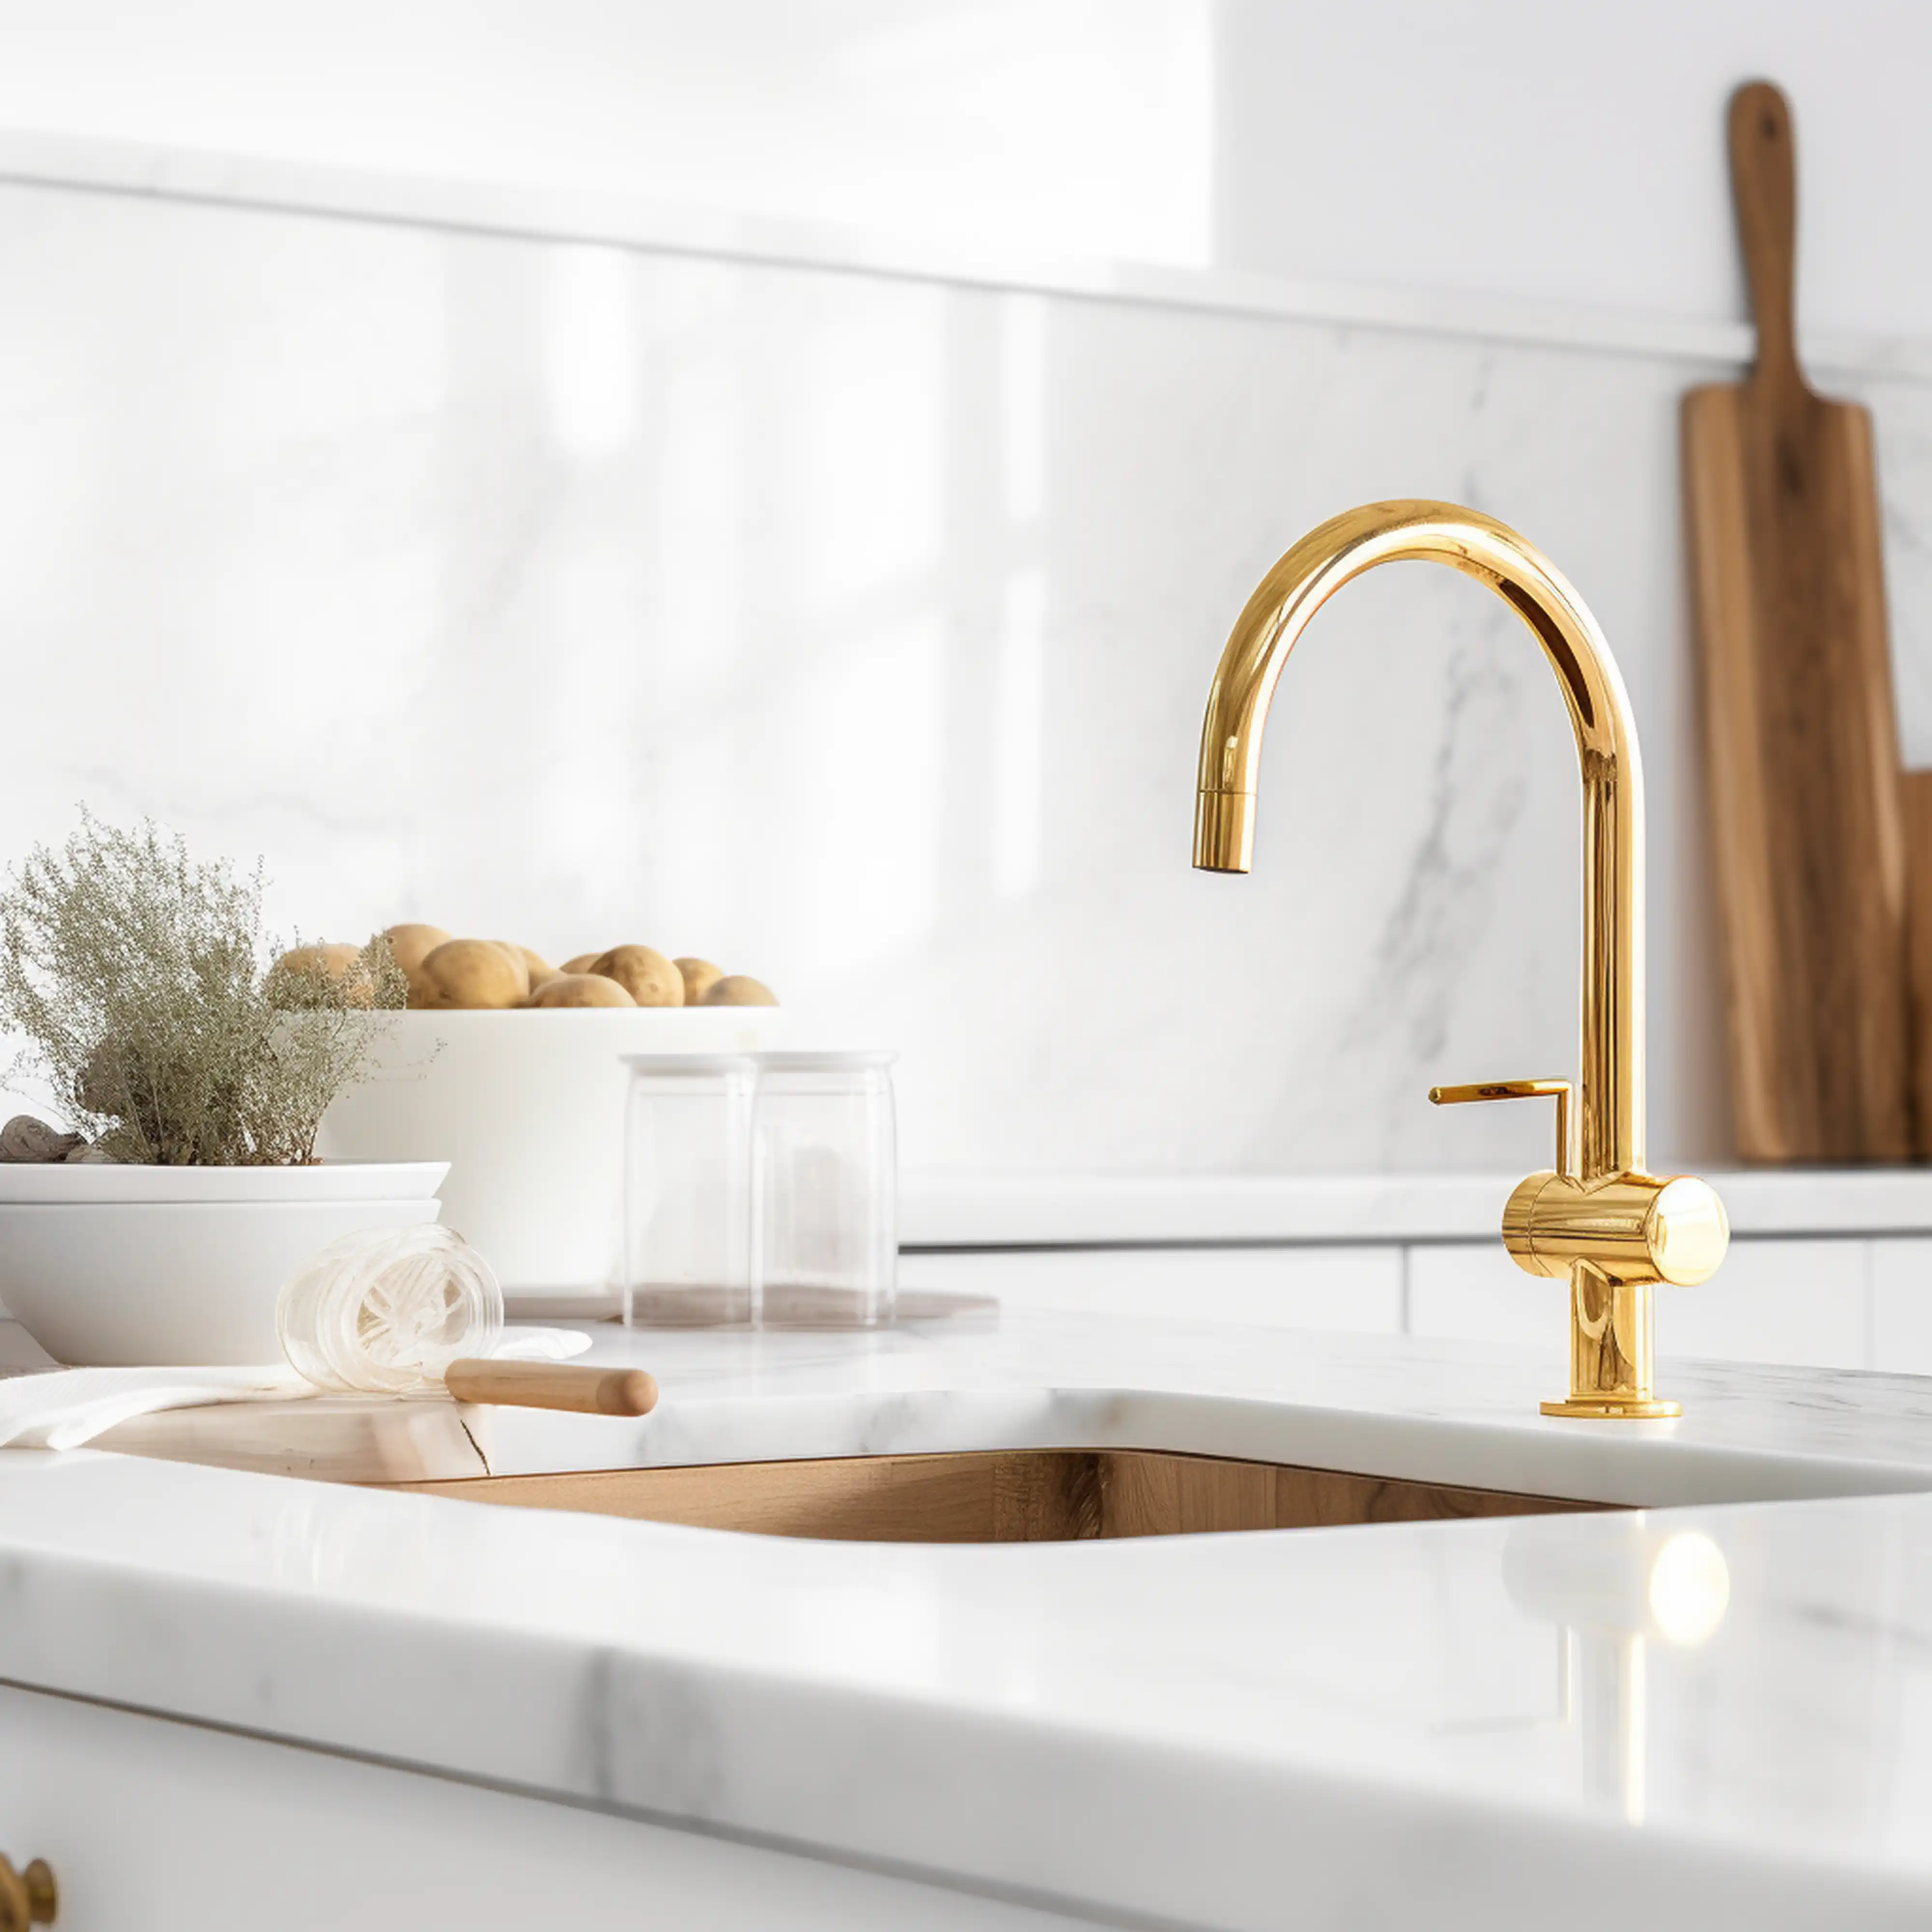 Elegant kitchen detail showcasing a gold faucet, marble countertop, and fresh produce arrangement